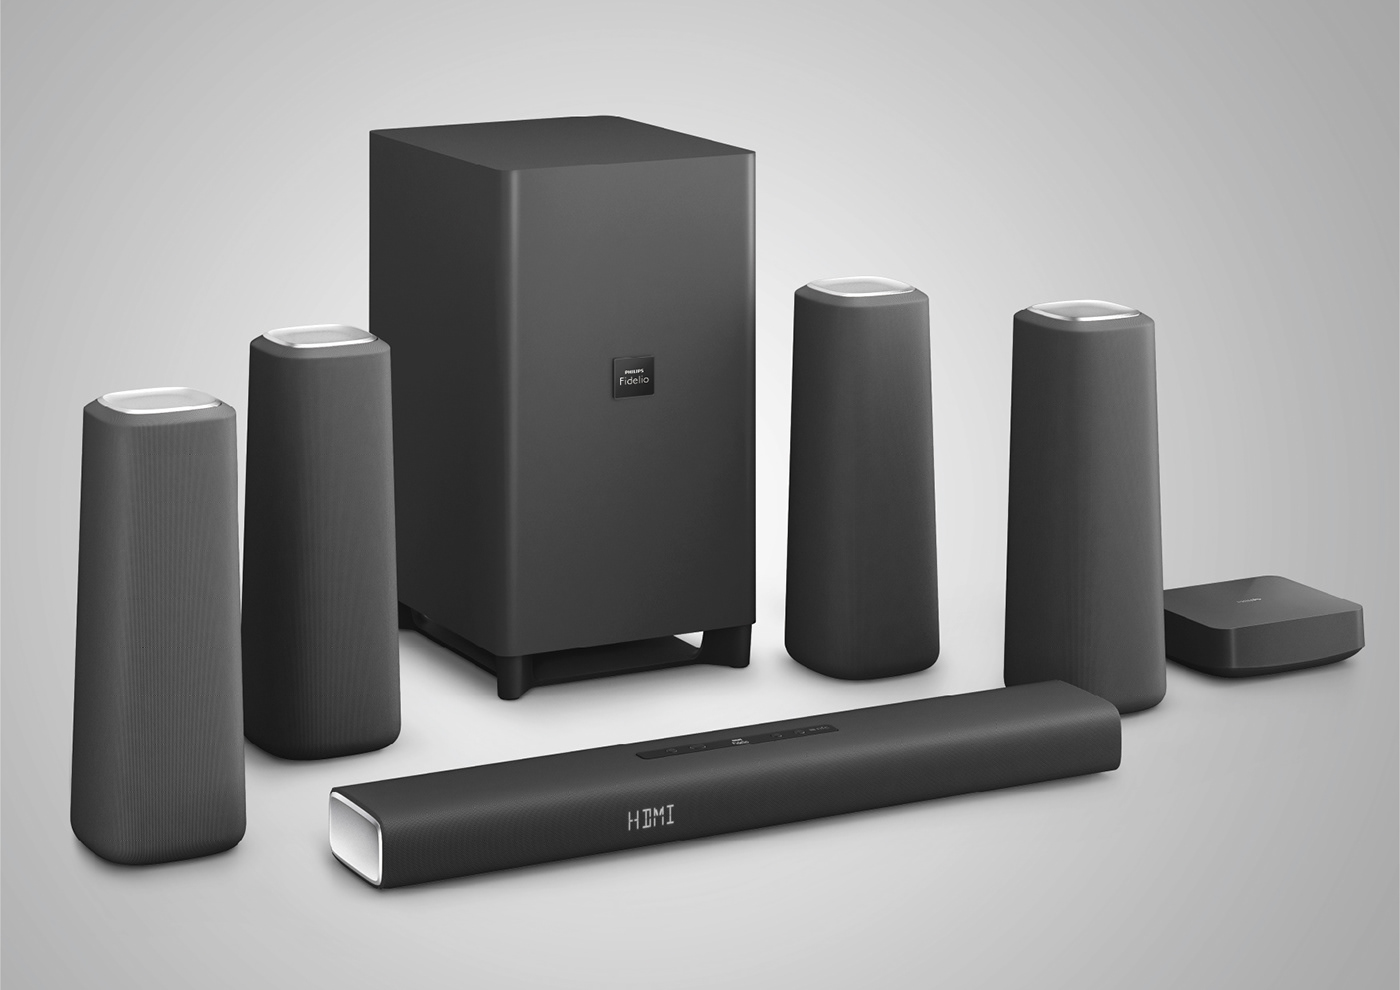 speaker reddot if home Audio sound system koodesign designstudio productdesign